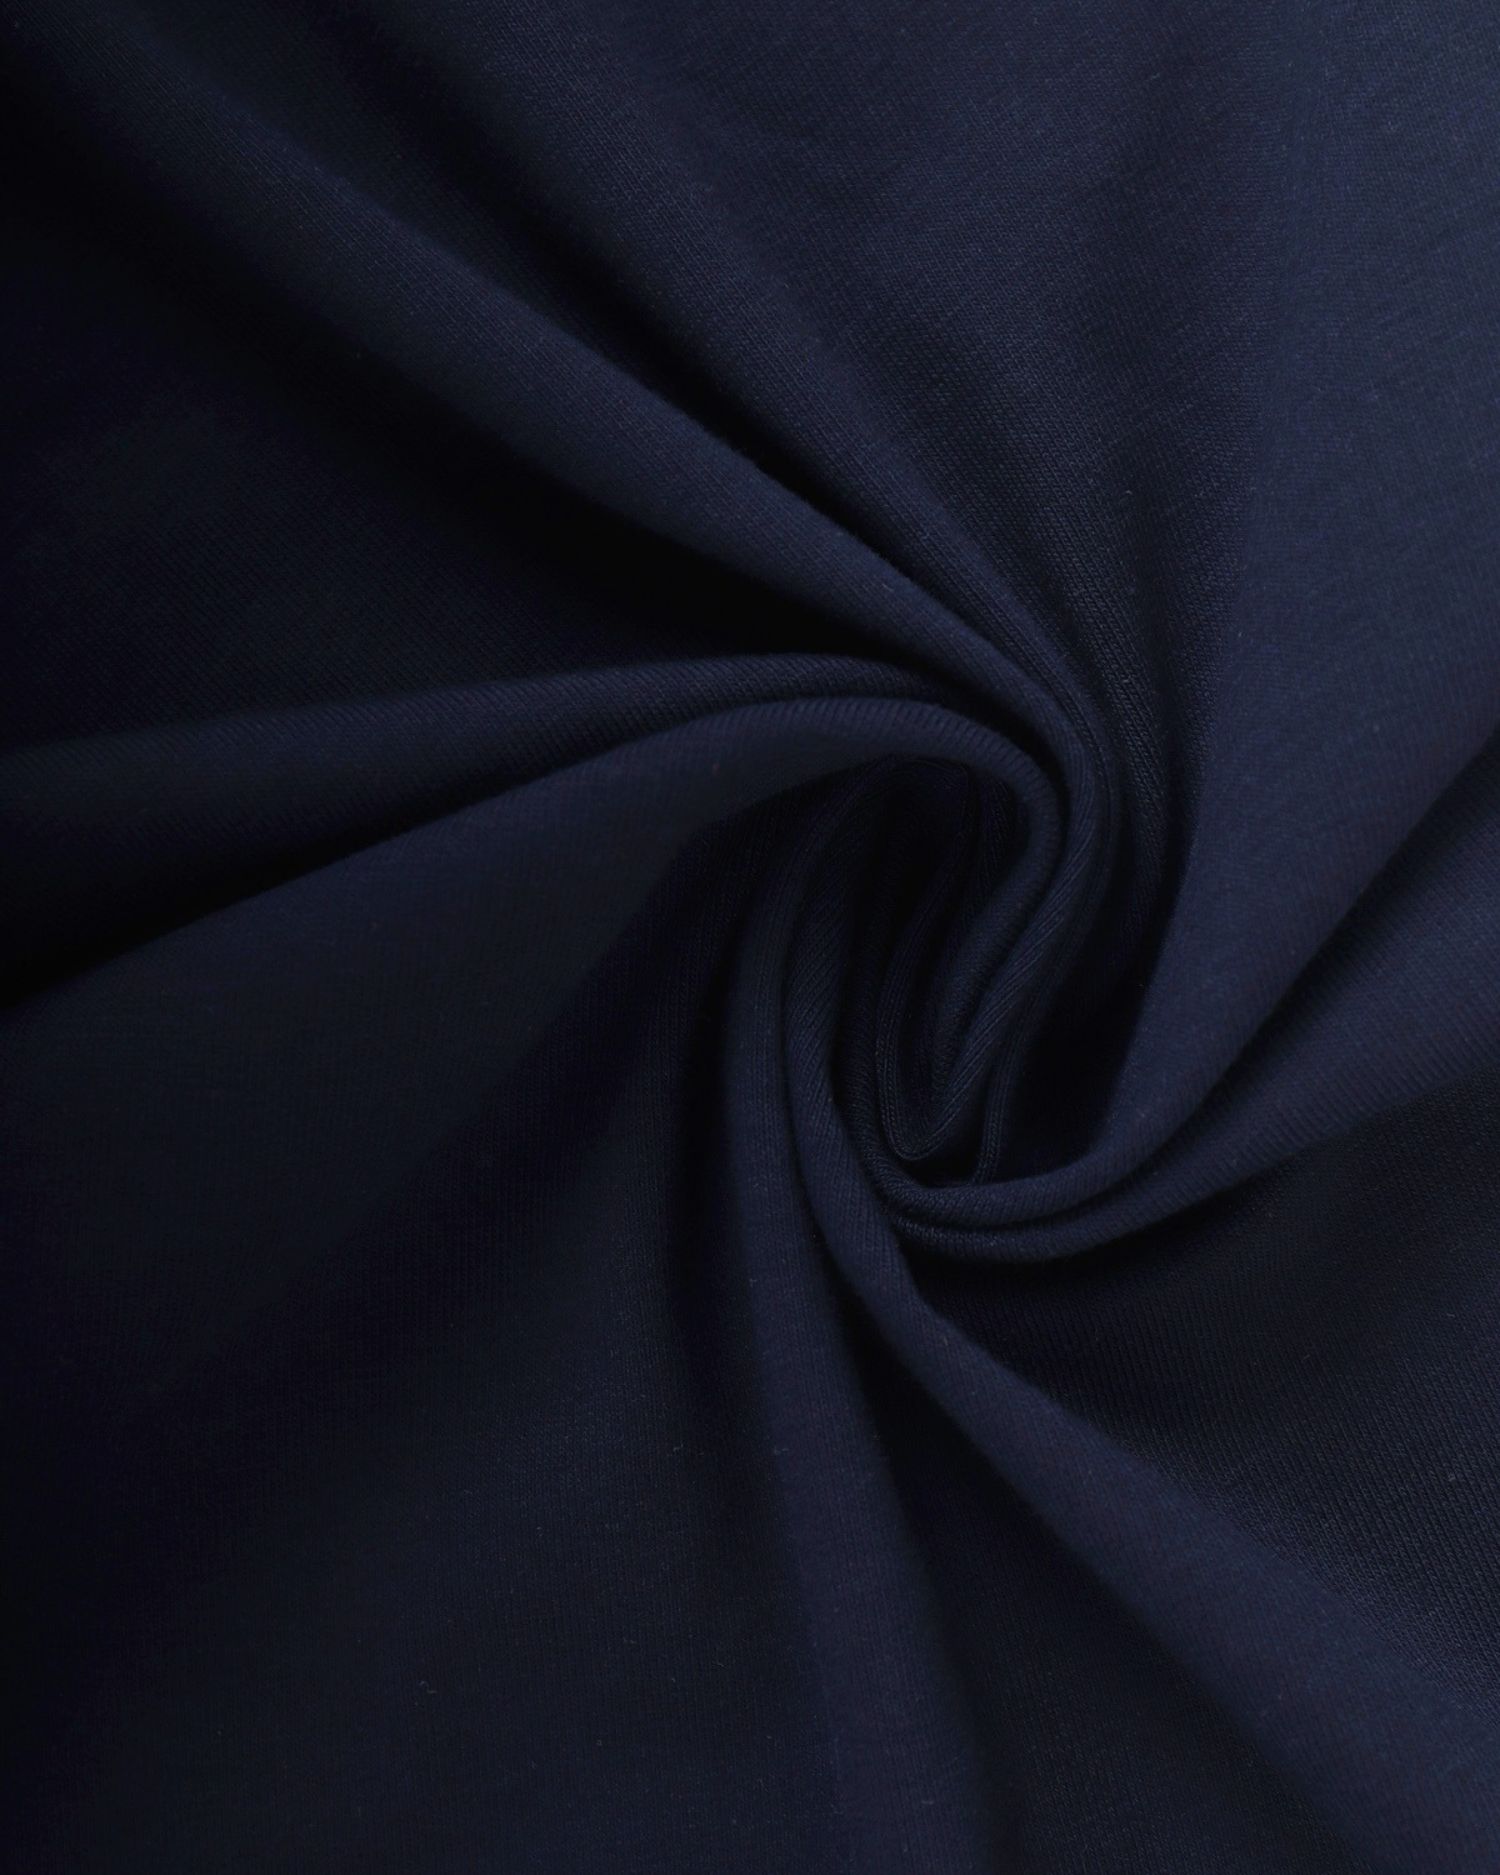 Bavlněný úplet s elastanem, 1 metr, 185gr/m2, tmavě modrý